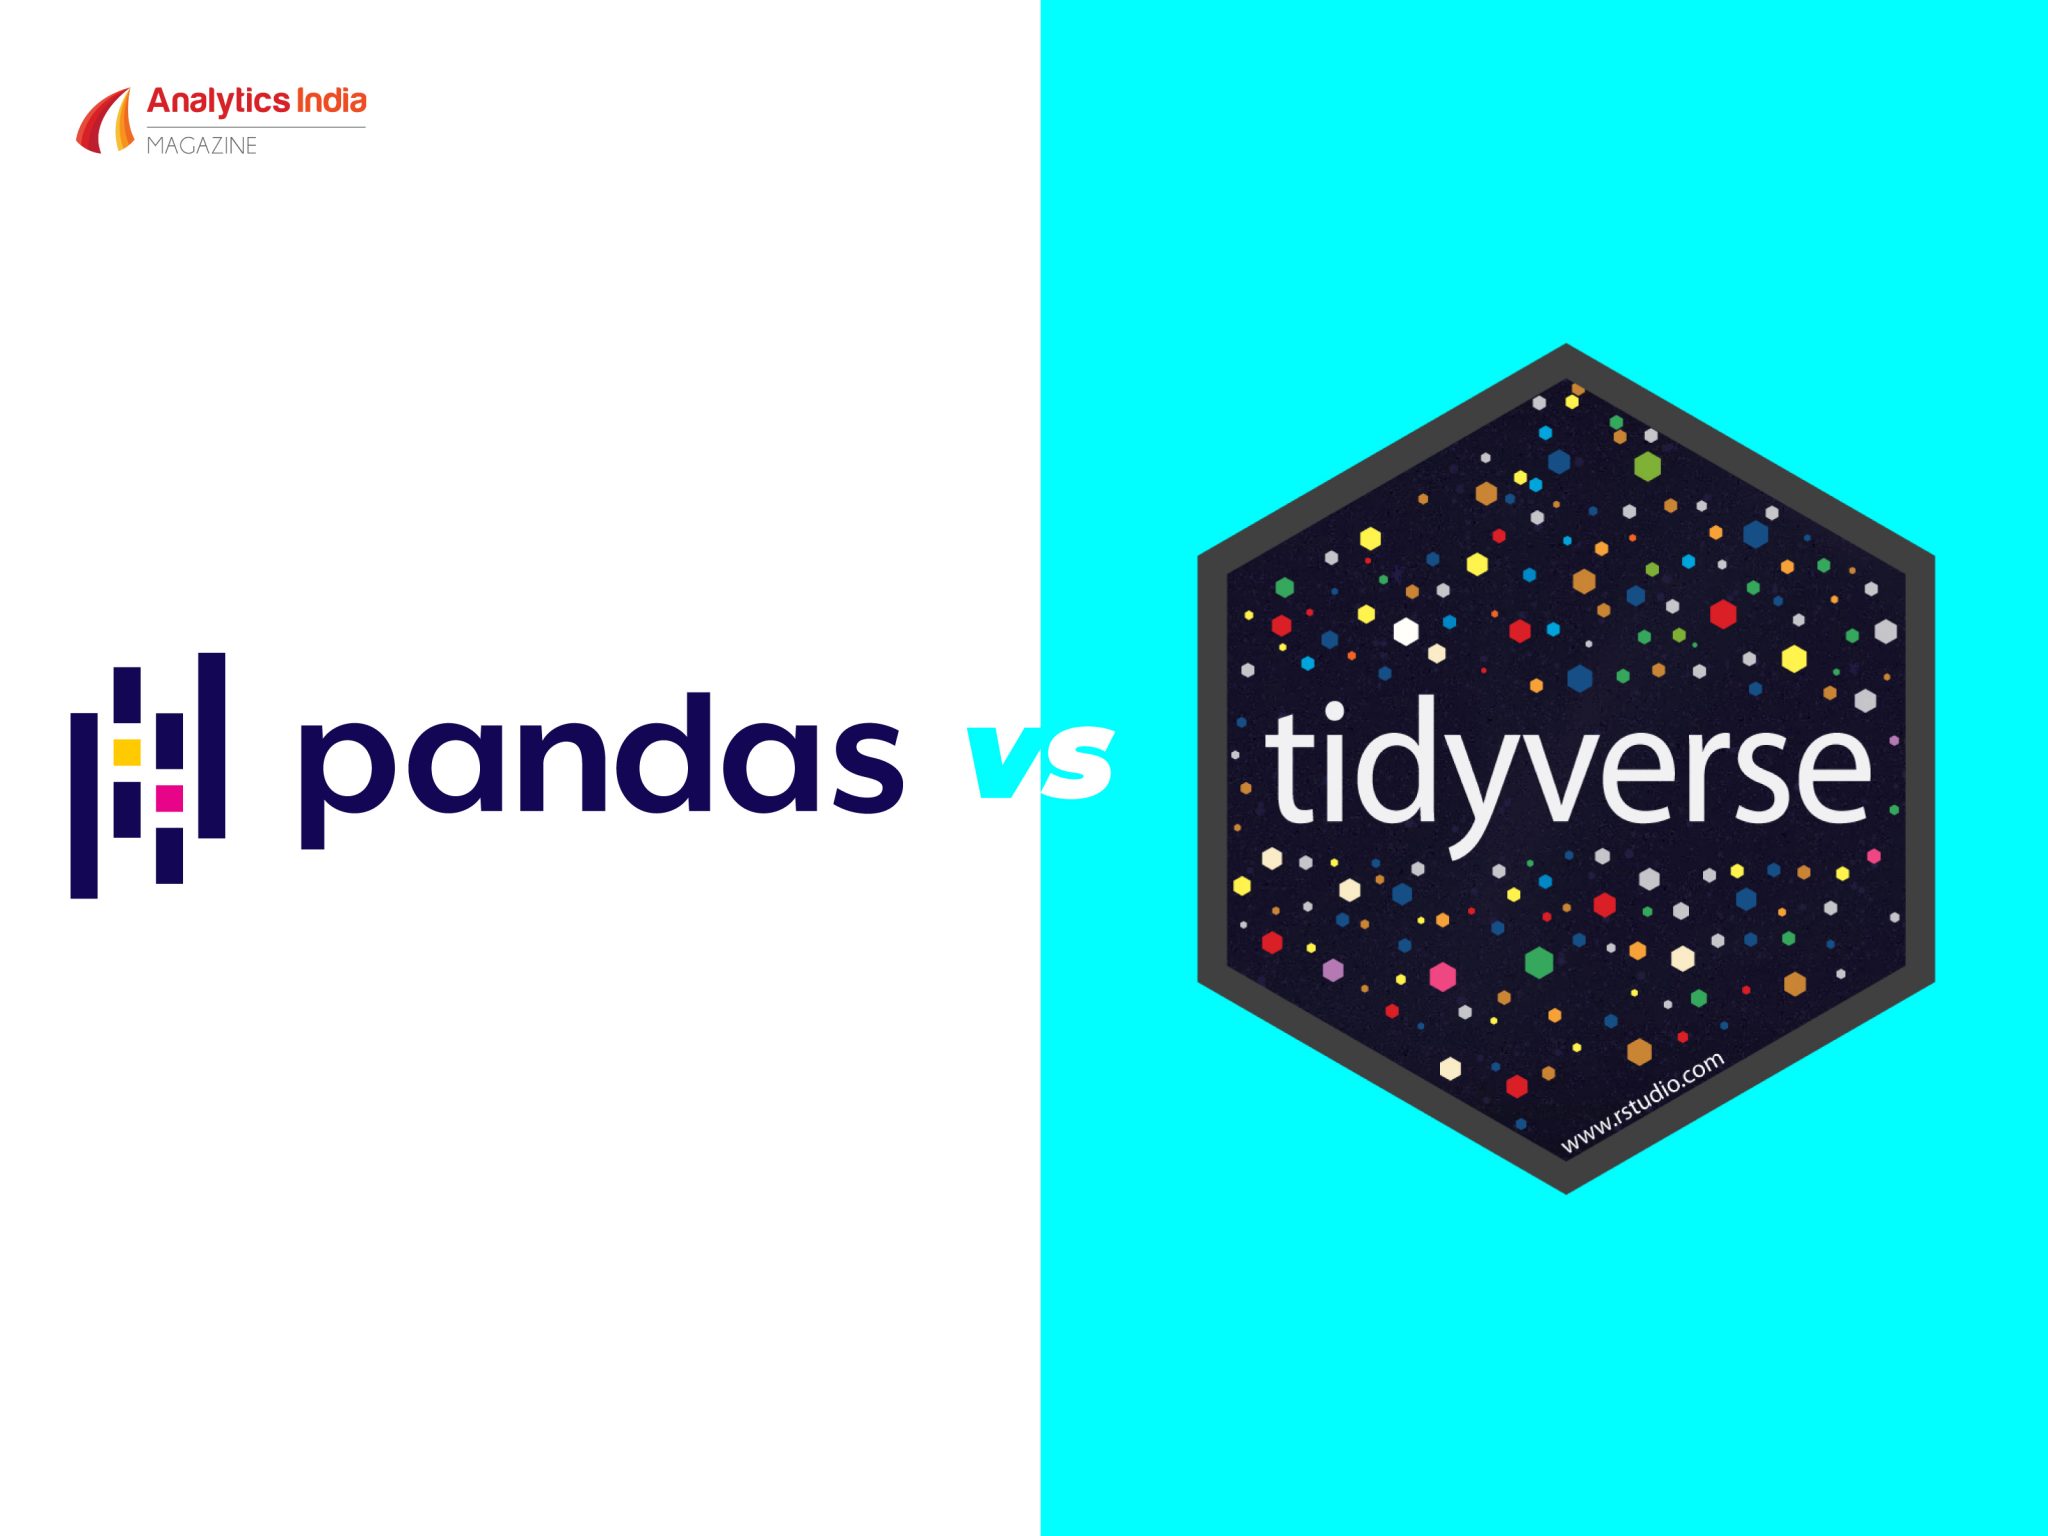 pandas vs tidyverse